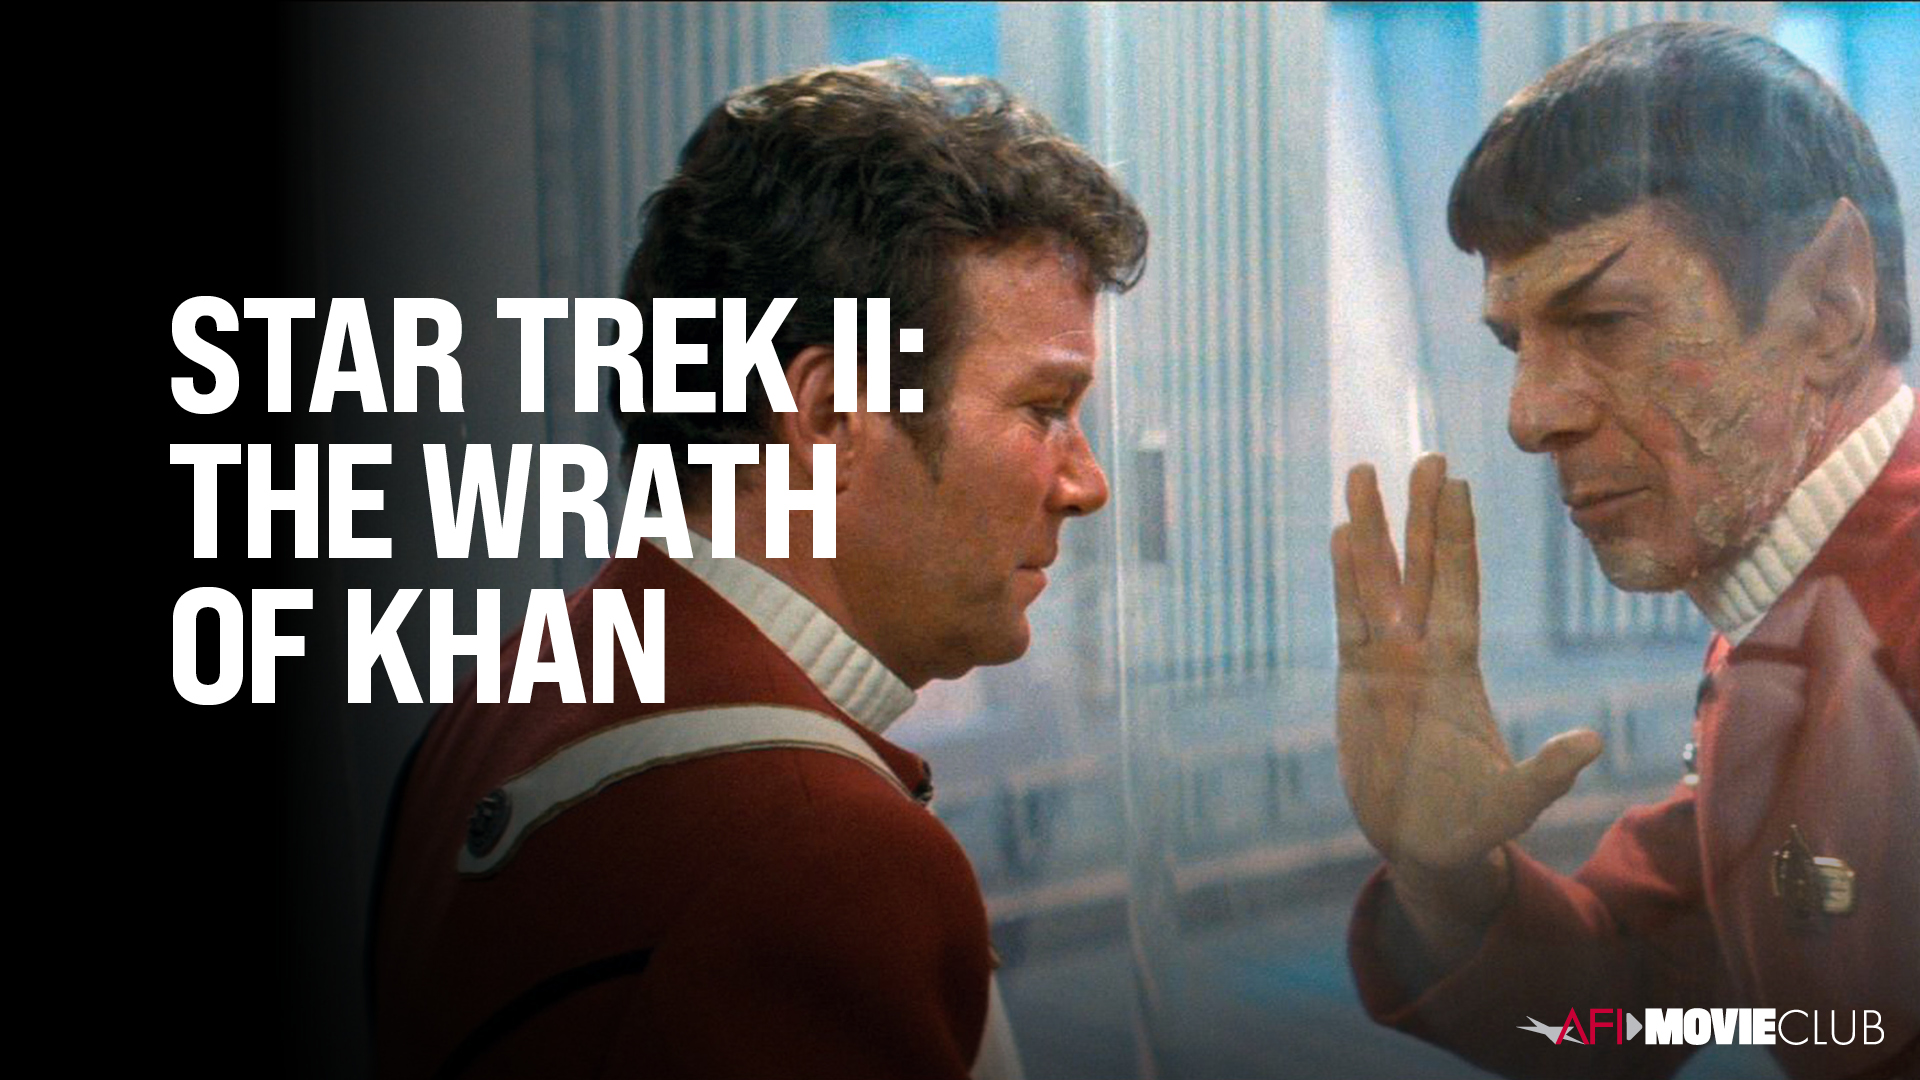 Star Trek II: The Wrath of Khan Film Still - William Shatner and Leonard Nimoy